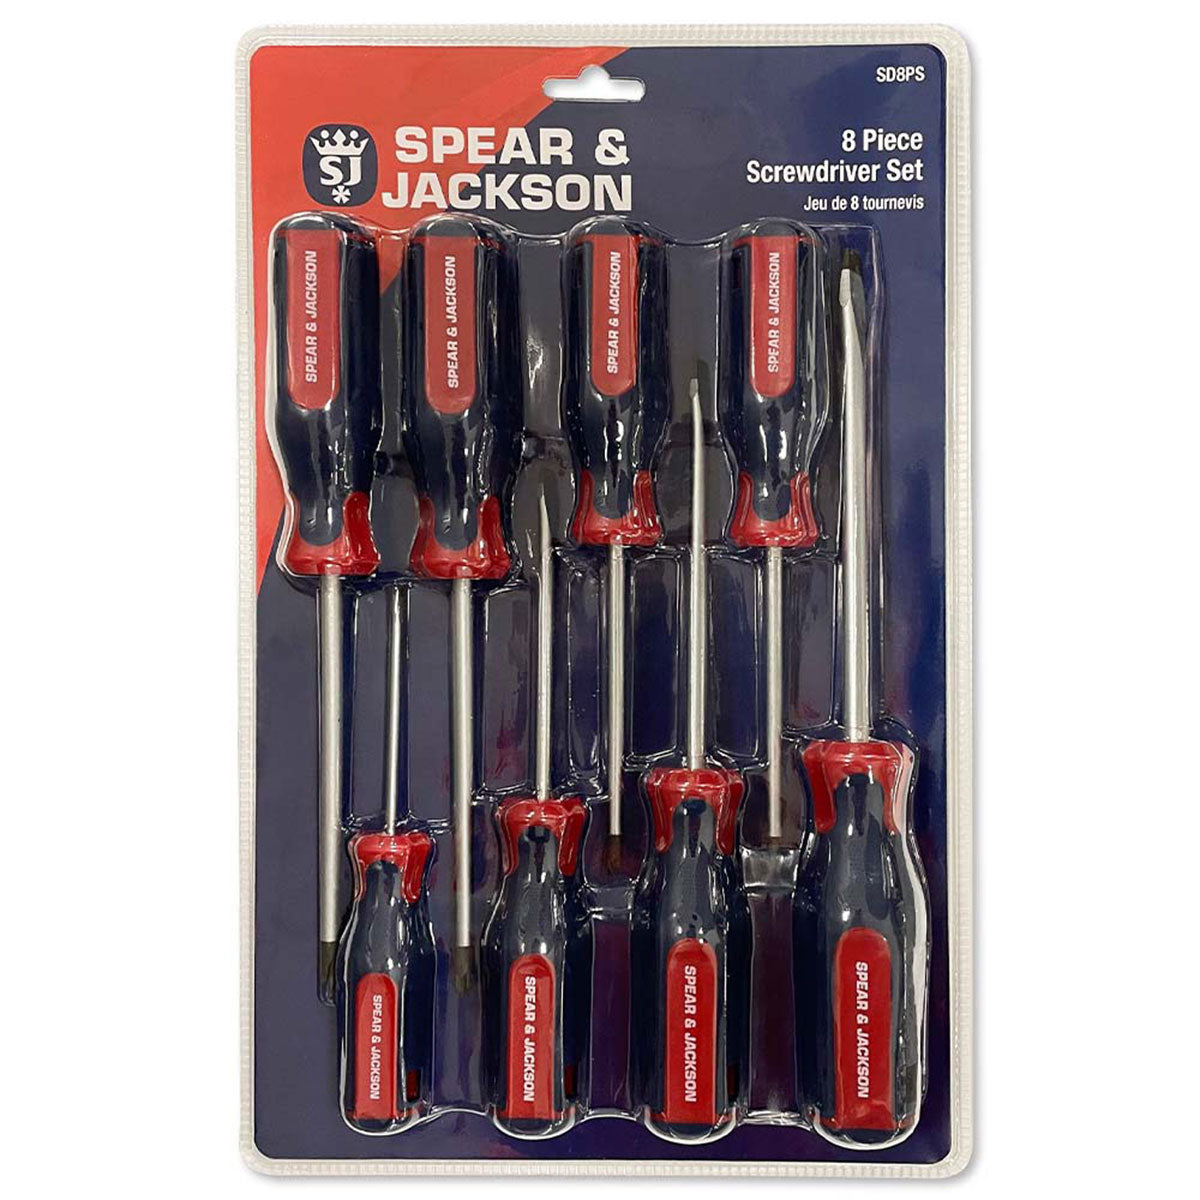 Spear & Jackson Screwdriver Set Of 8 Piece SD8PS